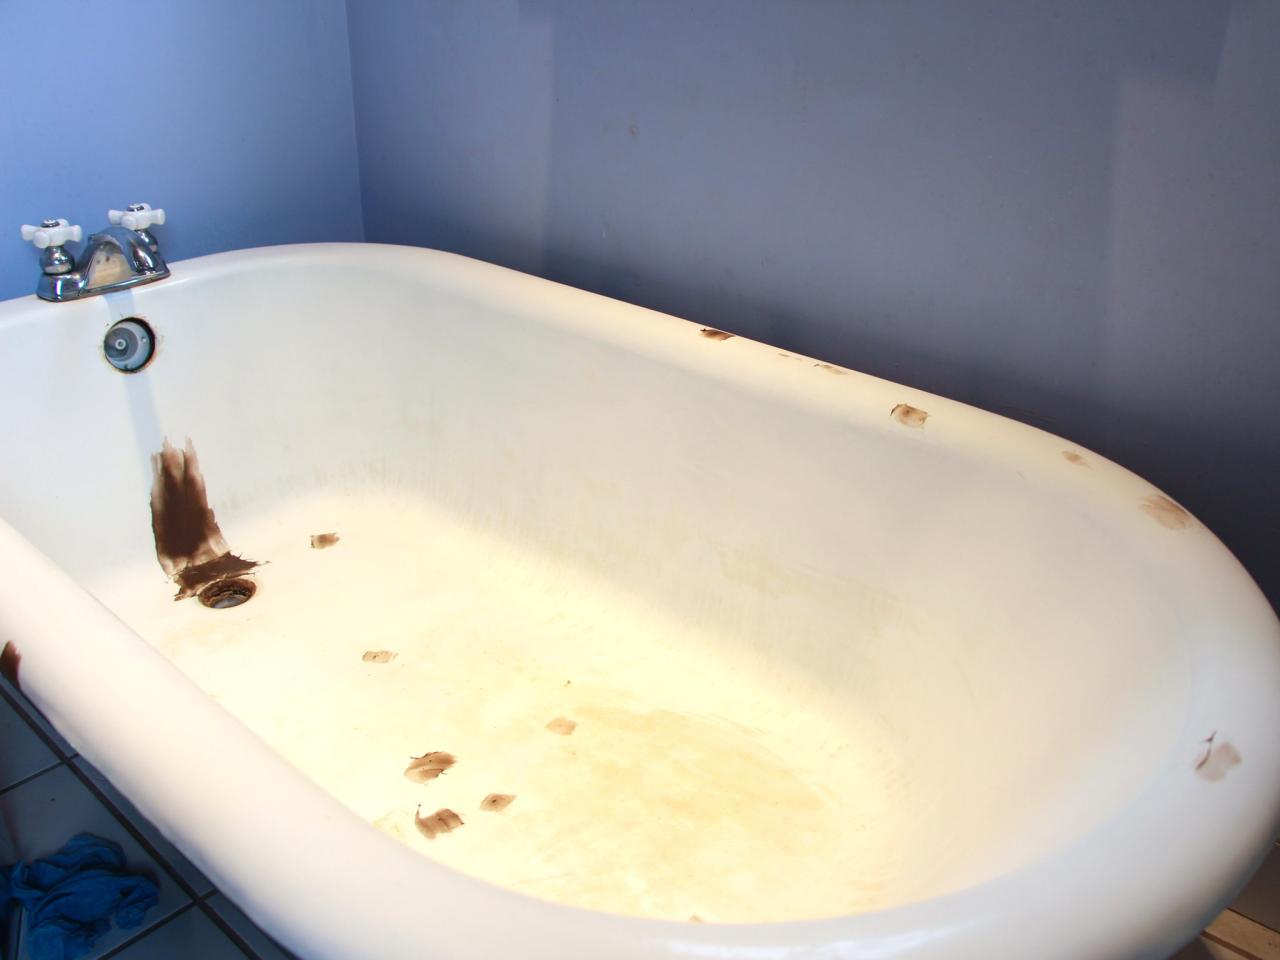 How To Refinish A Bathtub Tos Diy, How To Resurface A Bathtub Yourself